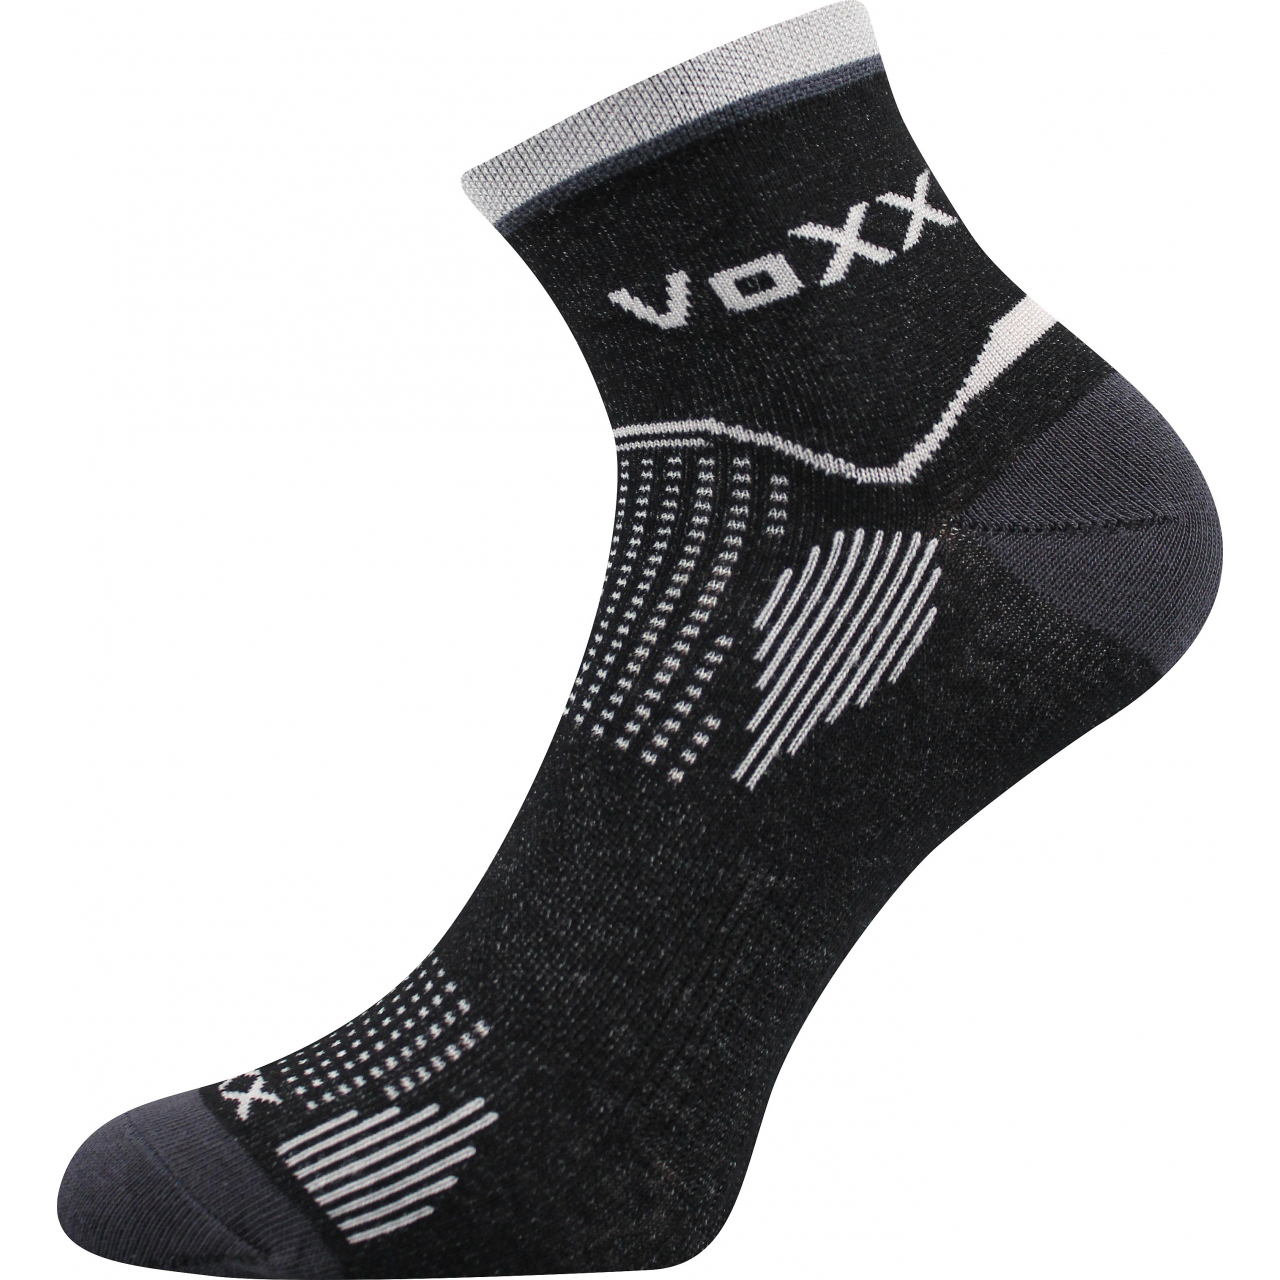 Ponožky unisex sportovní Voxx Sirius - černé, 35-38